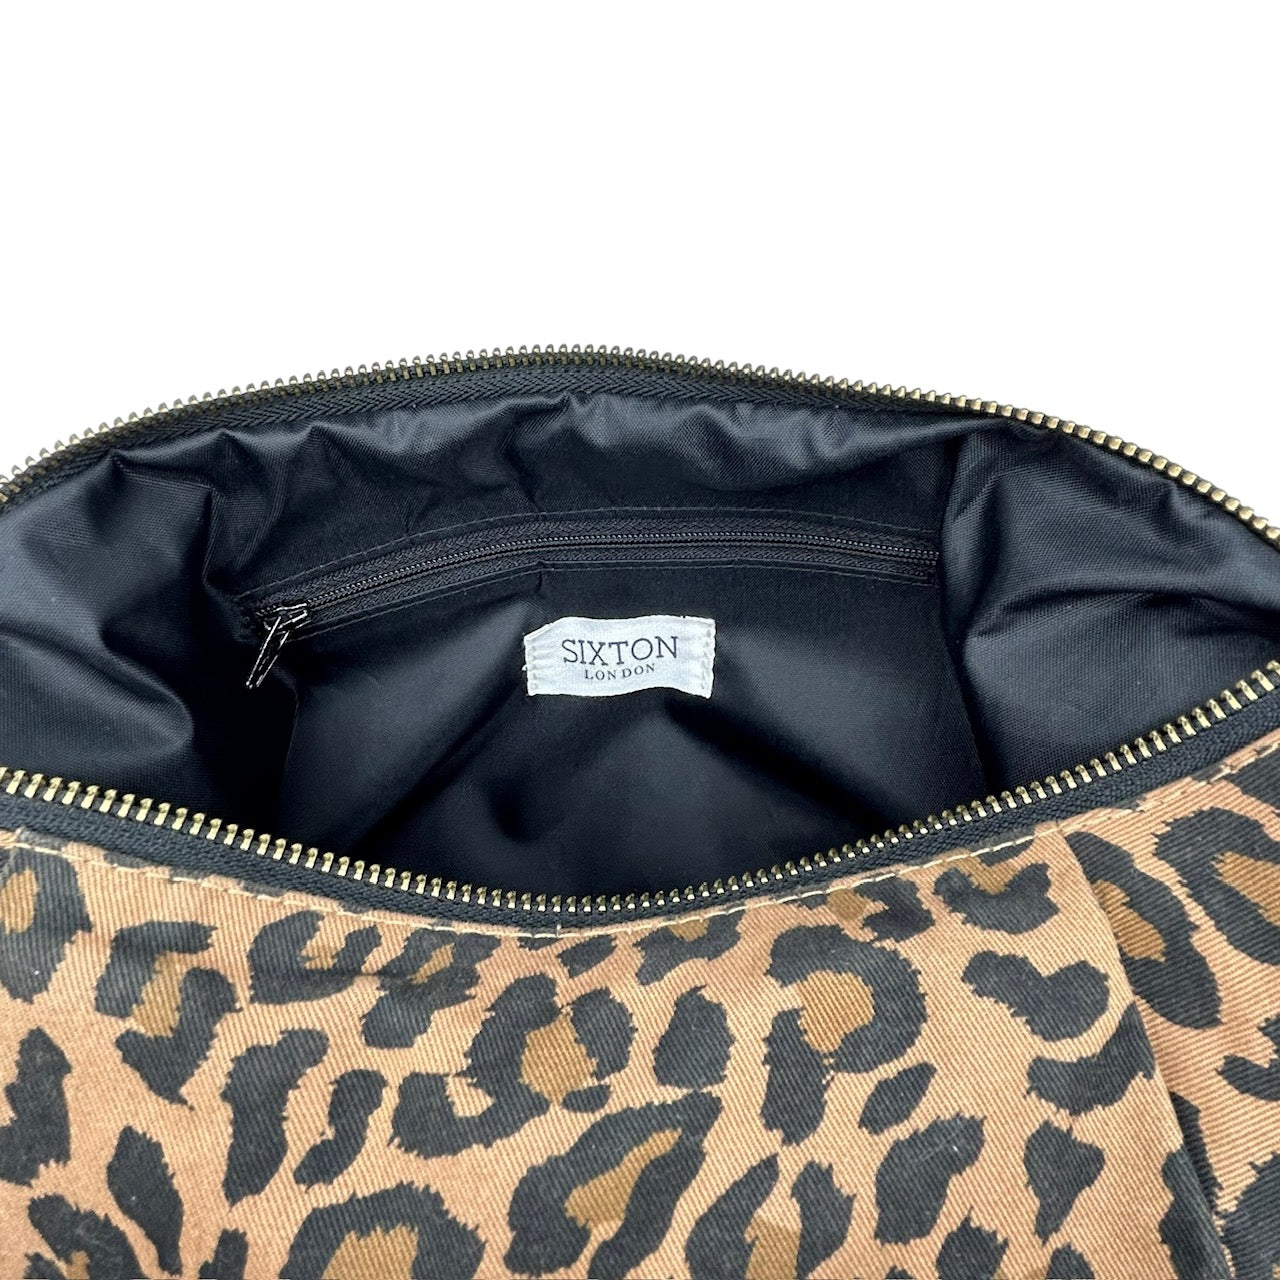 Leopard sling bag - small